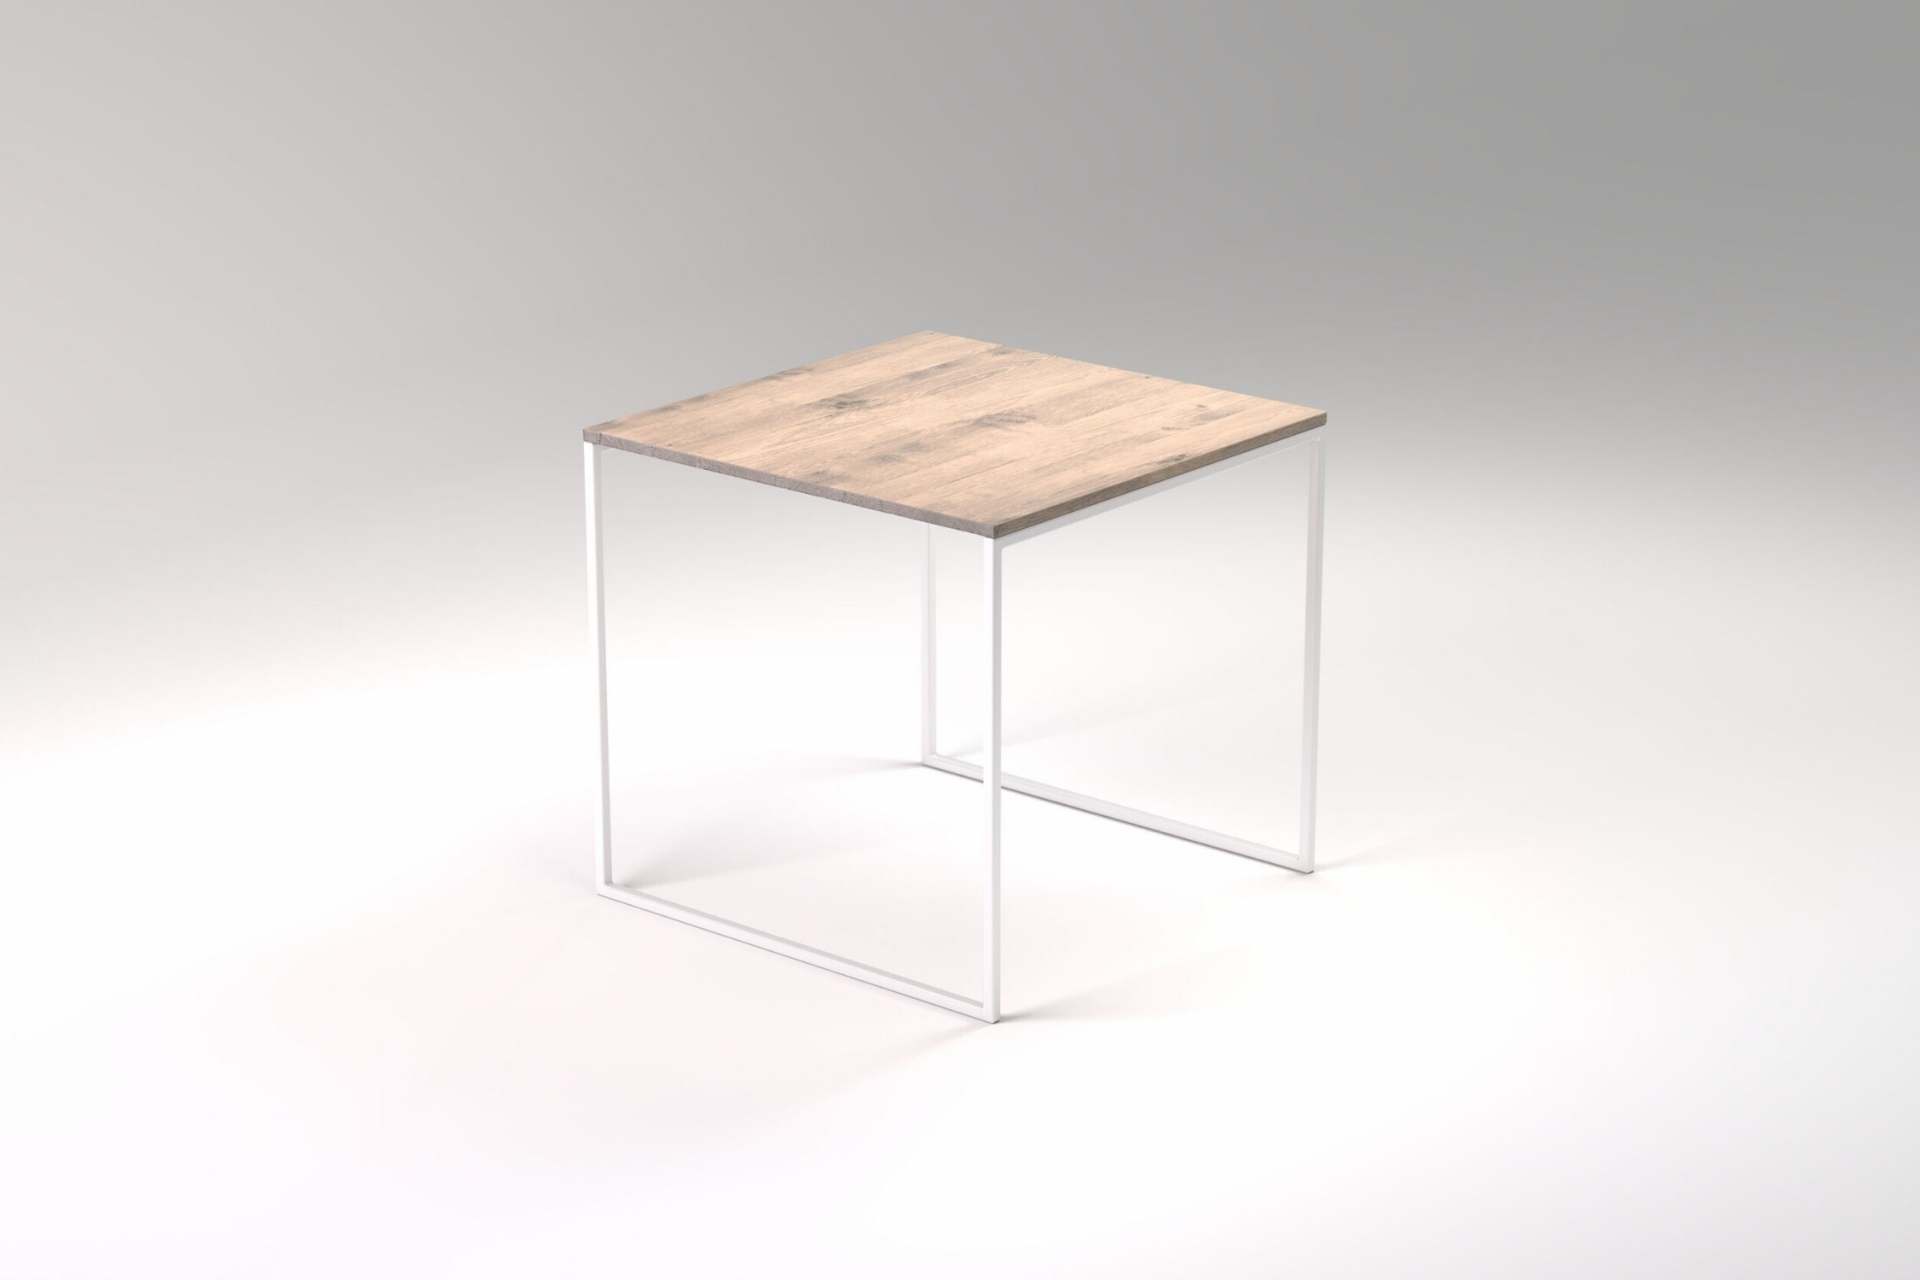 1_KVADRAT WHITE square kitchen table_SFD Furniture Design (2)